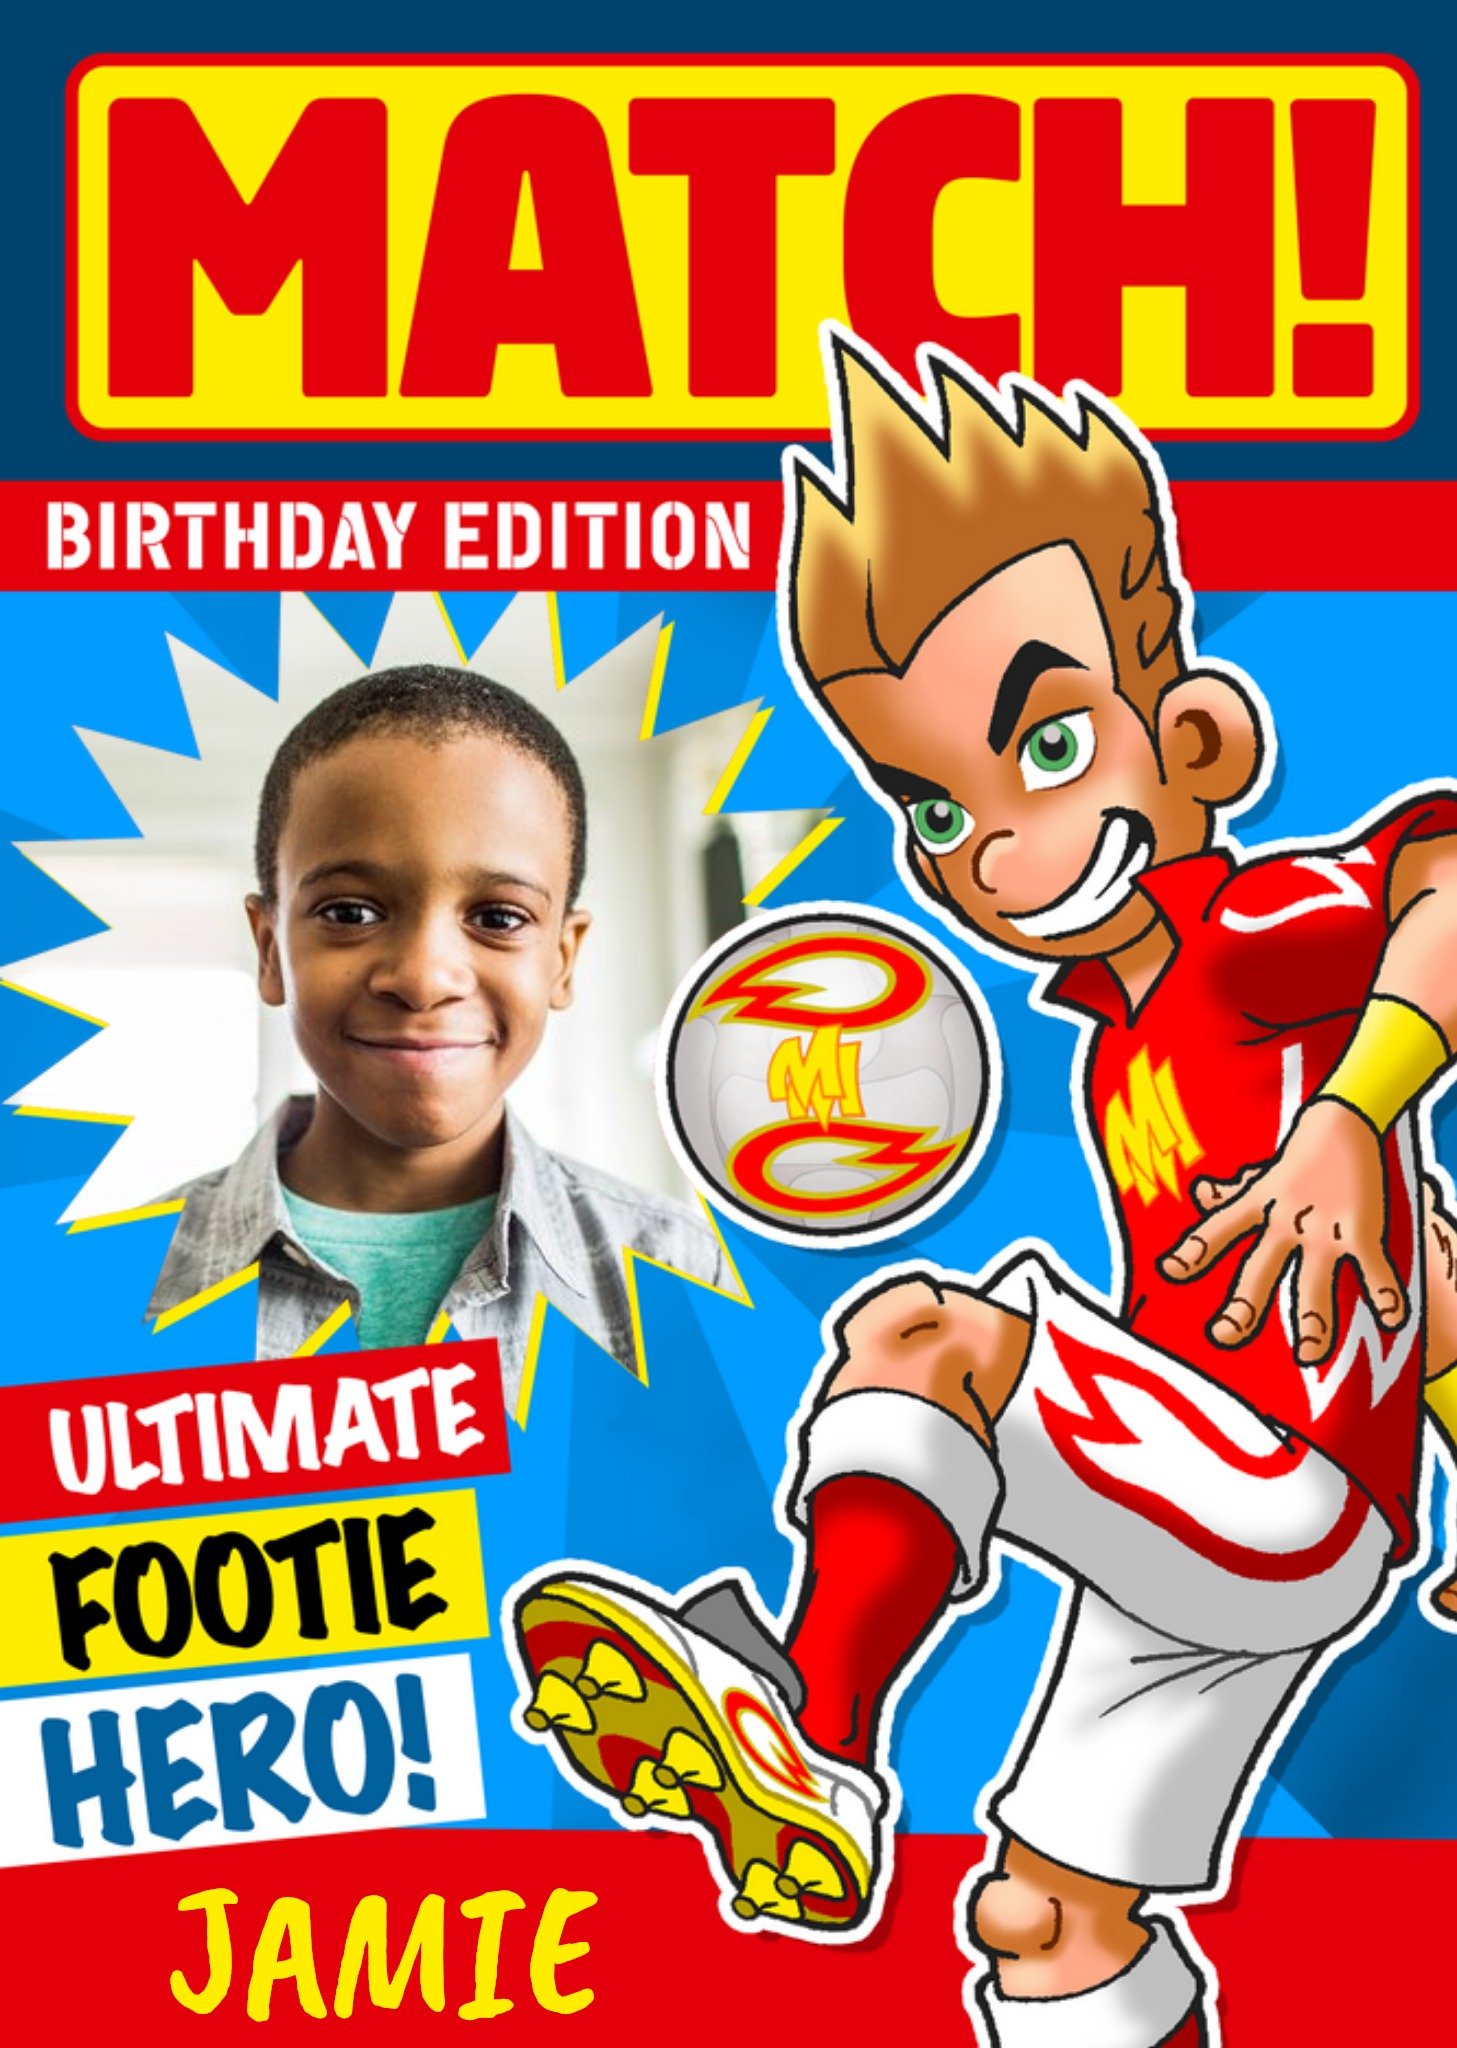 Moonpig Danilo Match Bright Graphic Spoof Magazine Cover Ultimate Footie Hero Photo Upload Birthday 